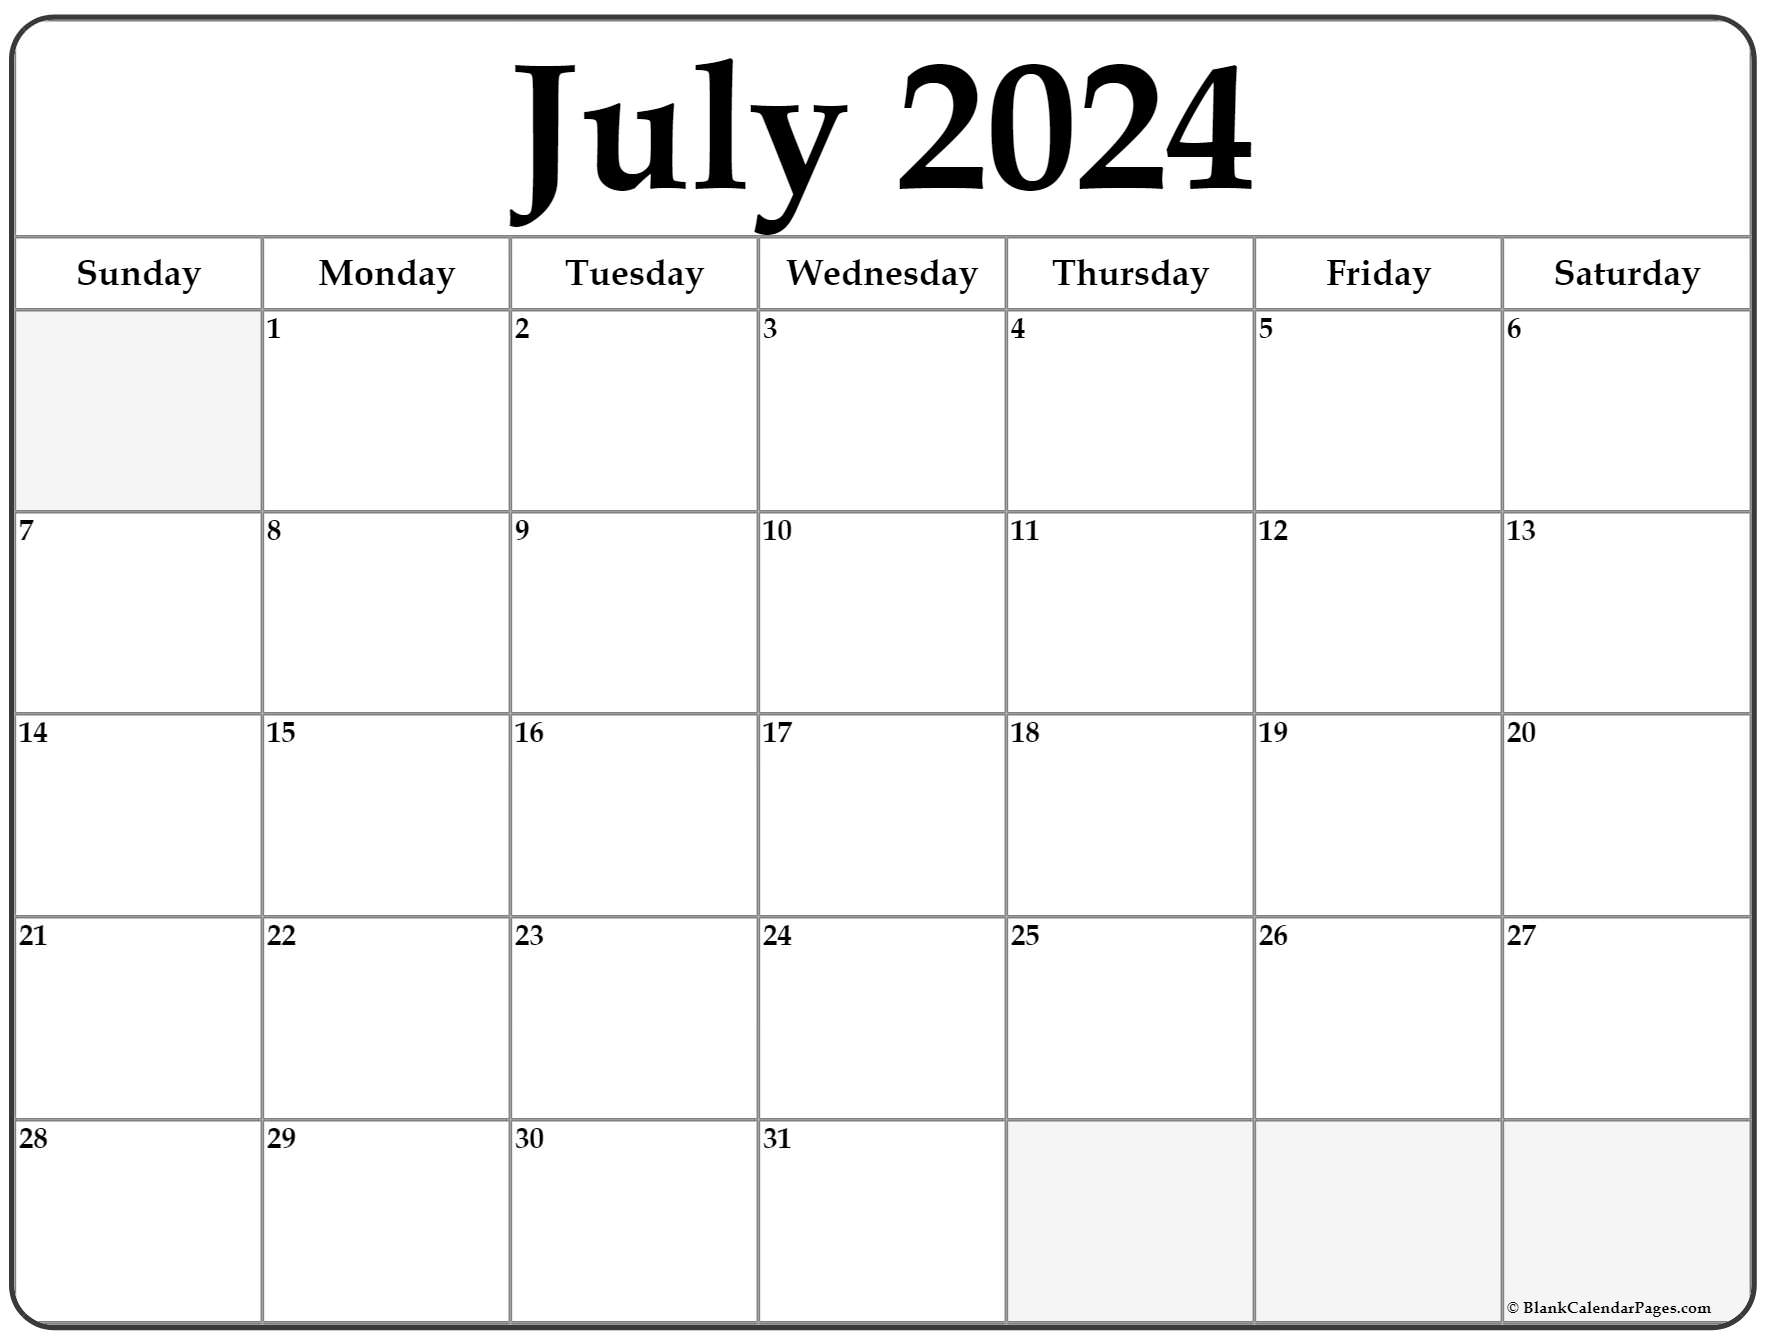 July 2024 Calendar | Free Printable Calendar for Summer Month Calendar 2024 Printable